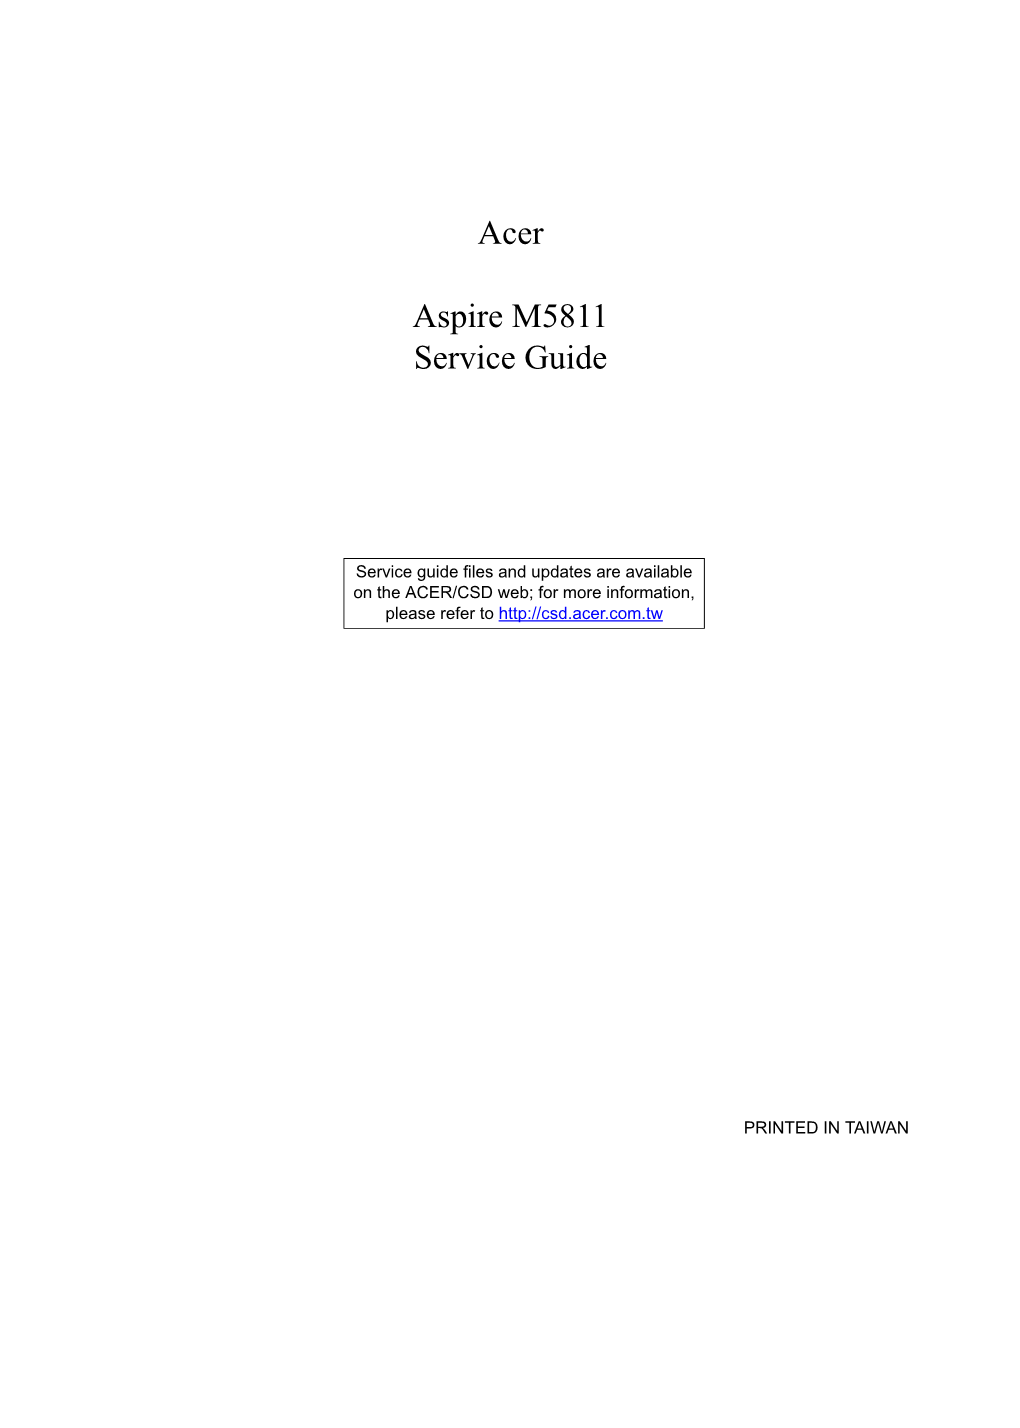 Acer Aspire M5811 Service Guide